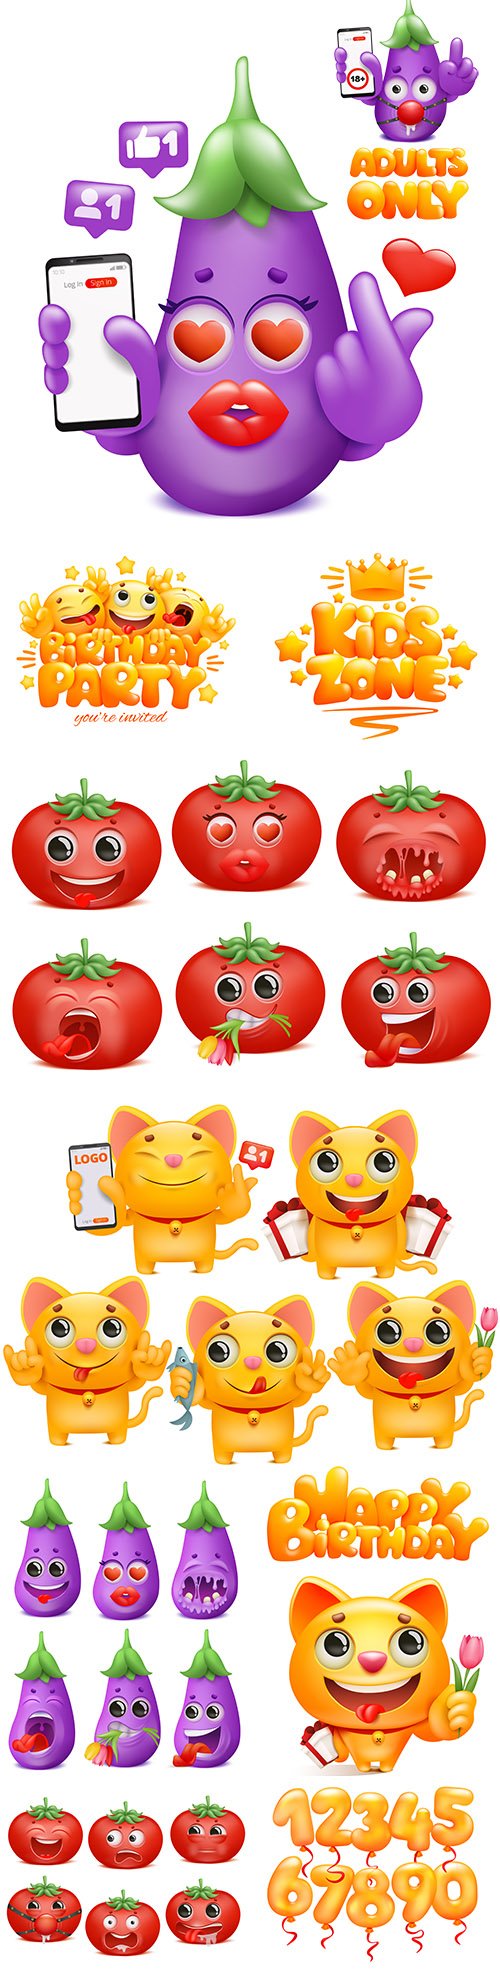 Smiley, tomato and eggplant emoji cartoon character